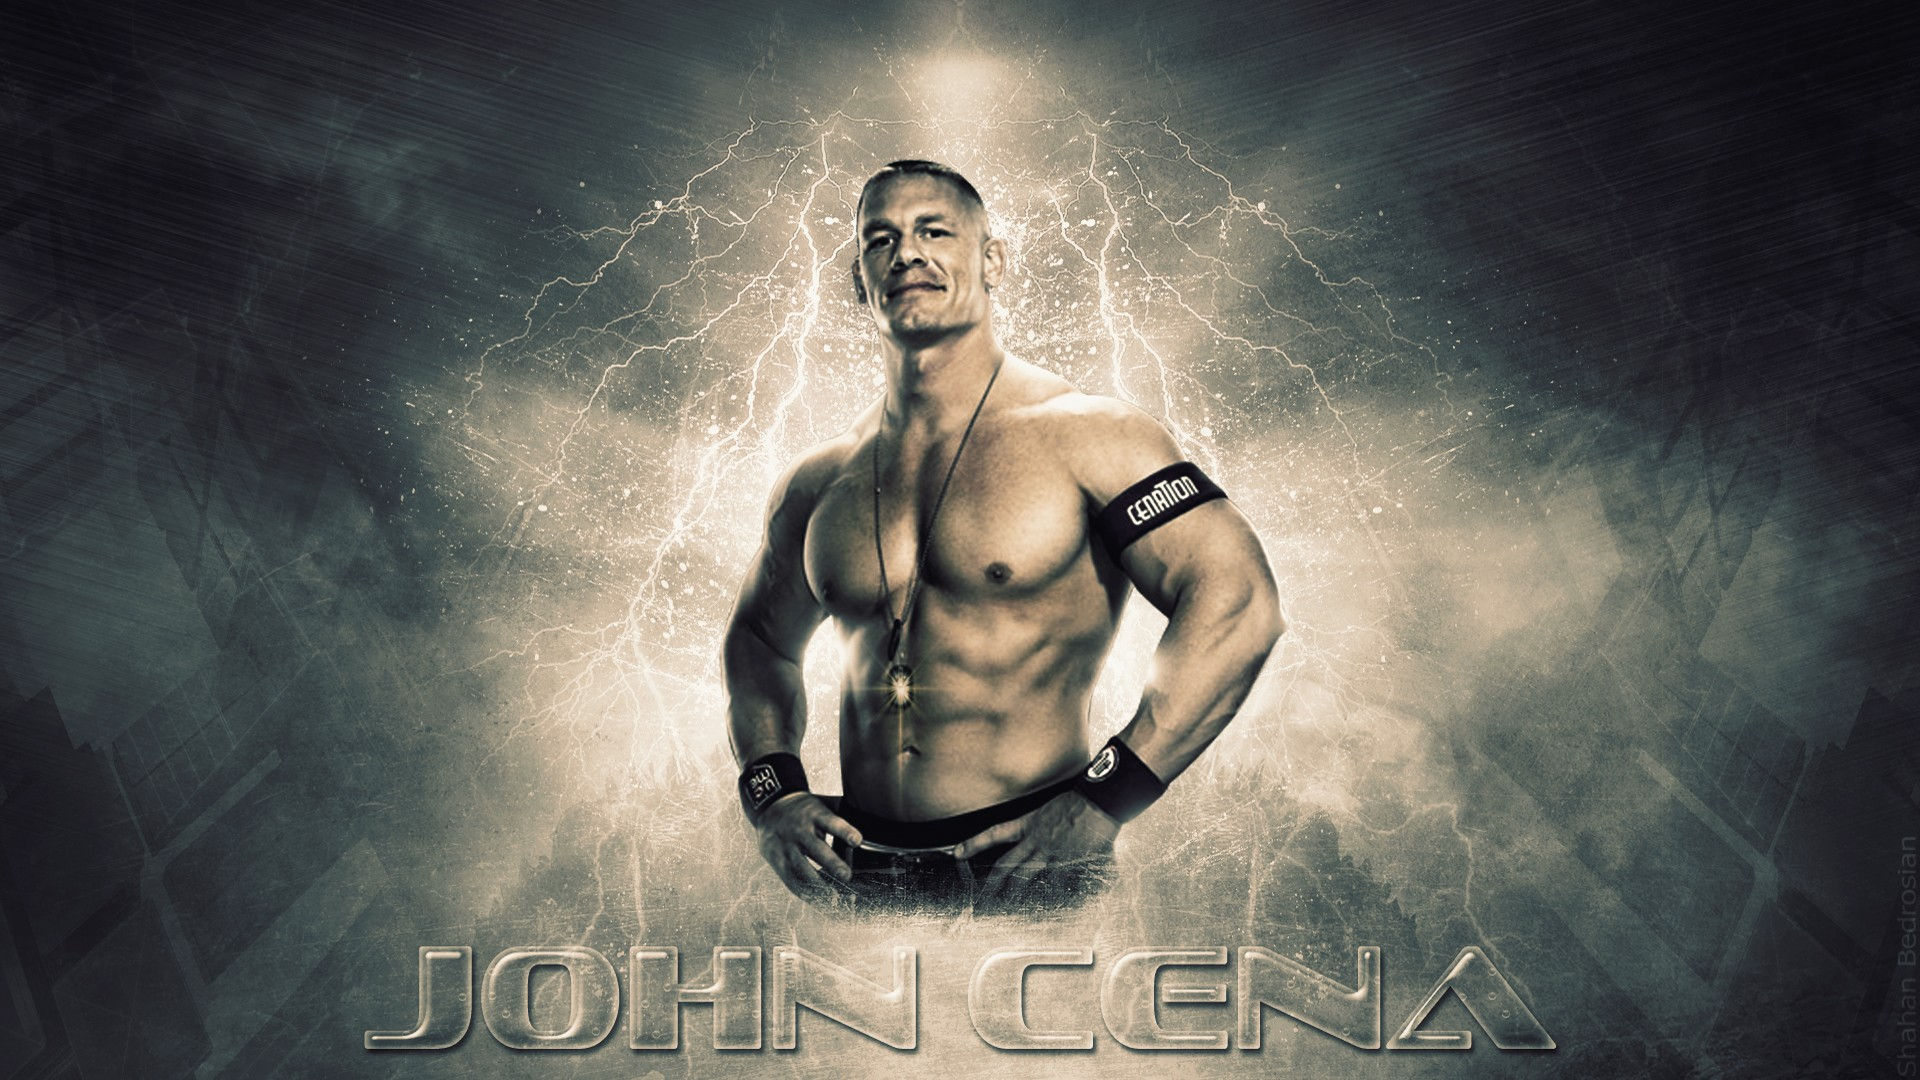 Wwe Wrestler John Cena Body Fitness Photos HD Wallpaper